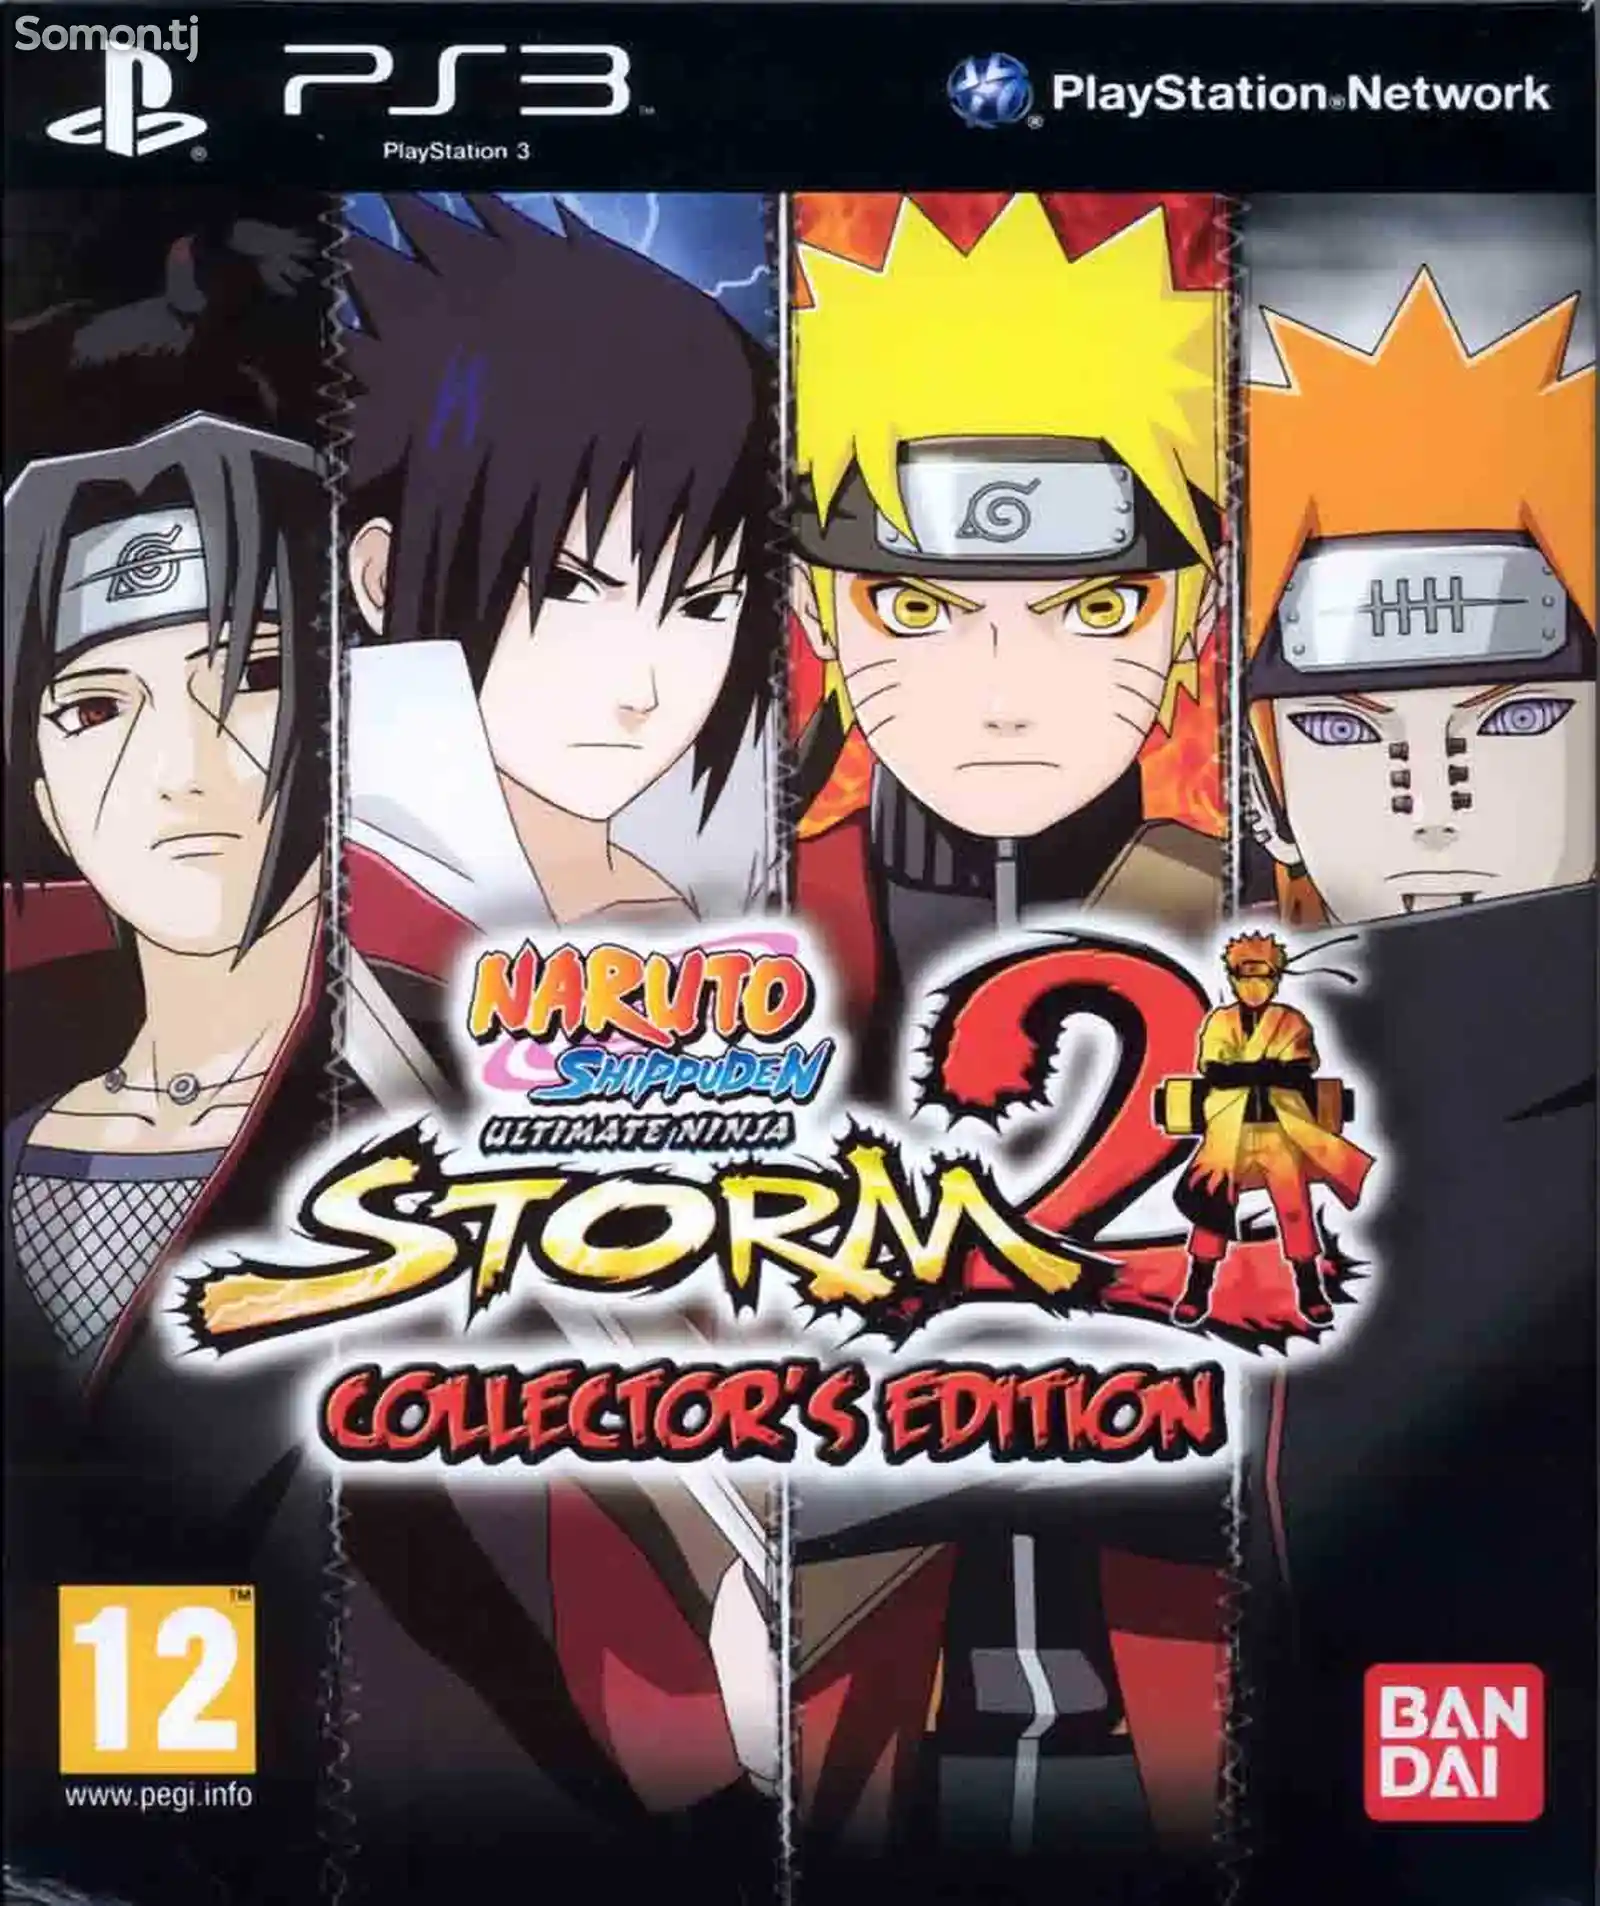 Игра Naruto.Ultimate.Ninja.Storm 2 на всех моделей Play Station-3